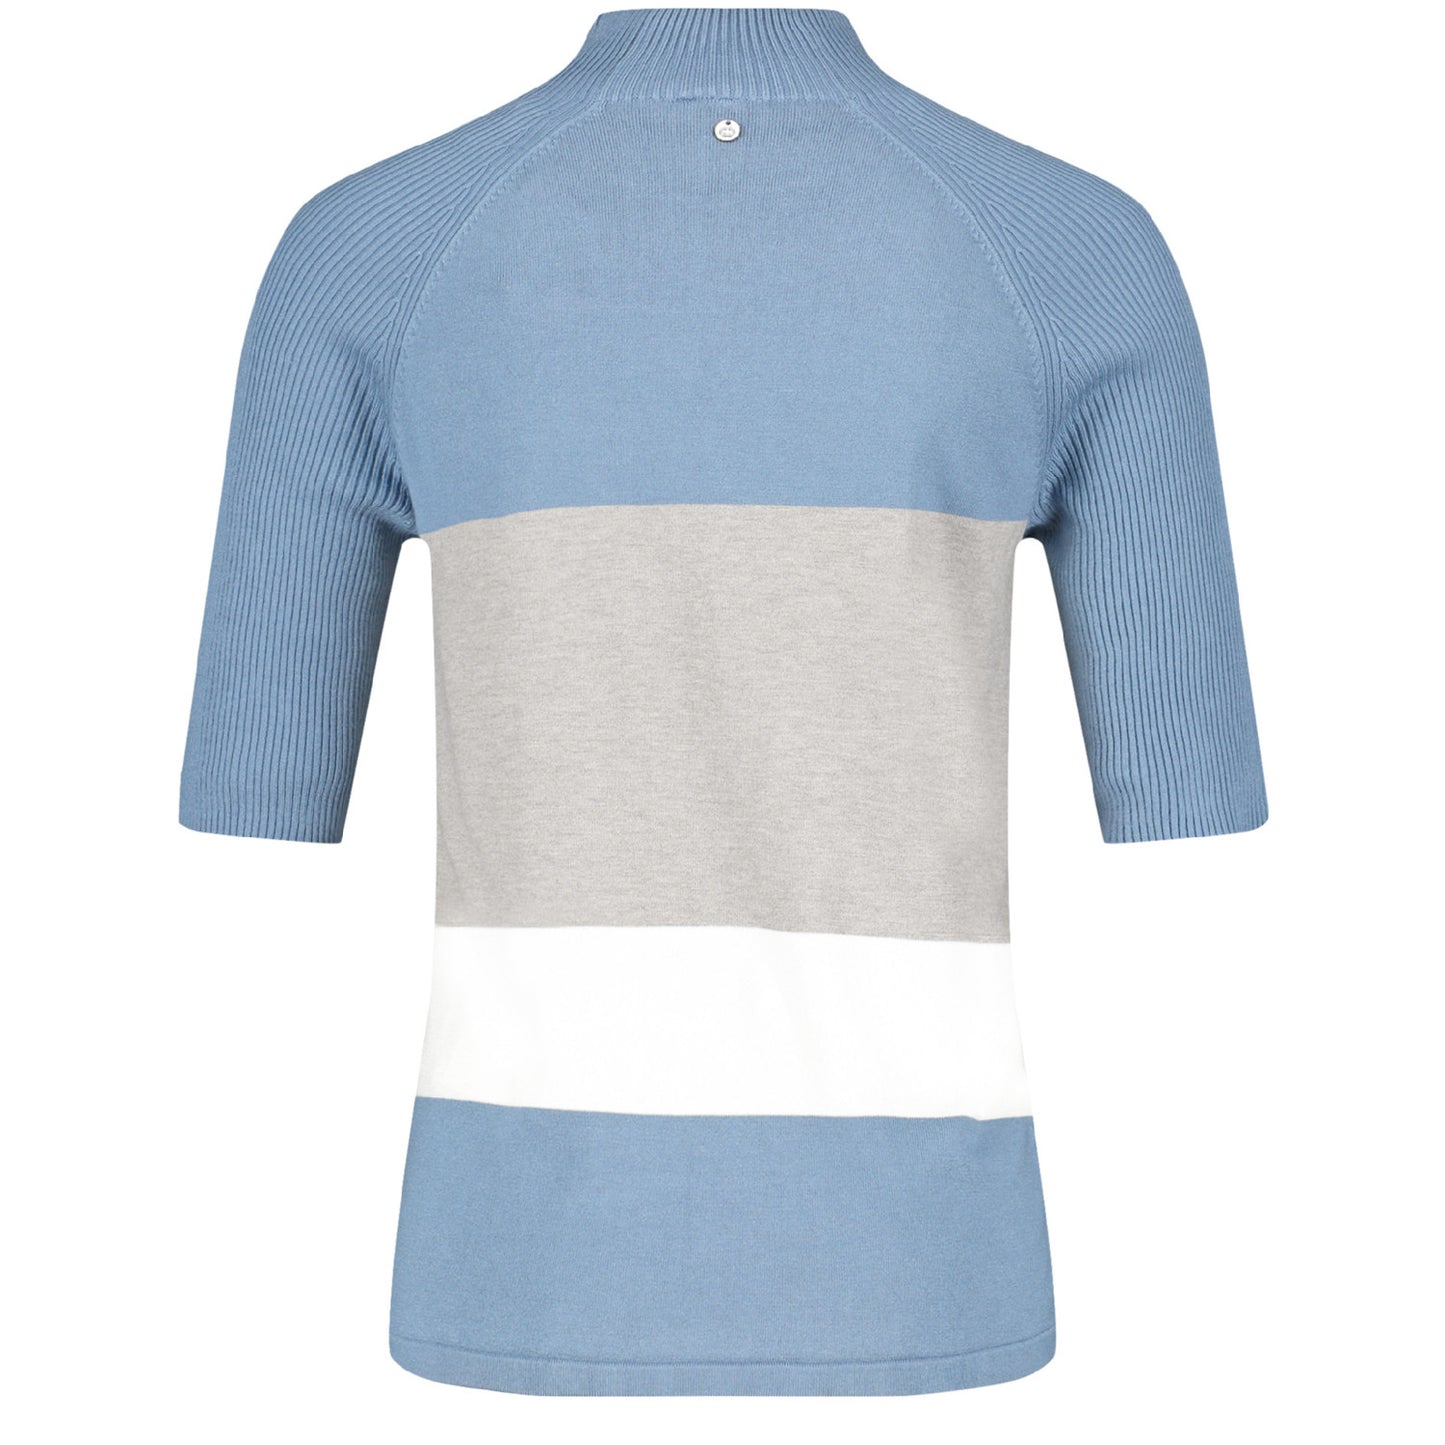 Gerry Weber 770508 44707 8091 Blue/Ecru/White Patch Short Sleeve Pullover